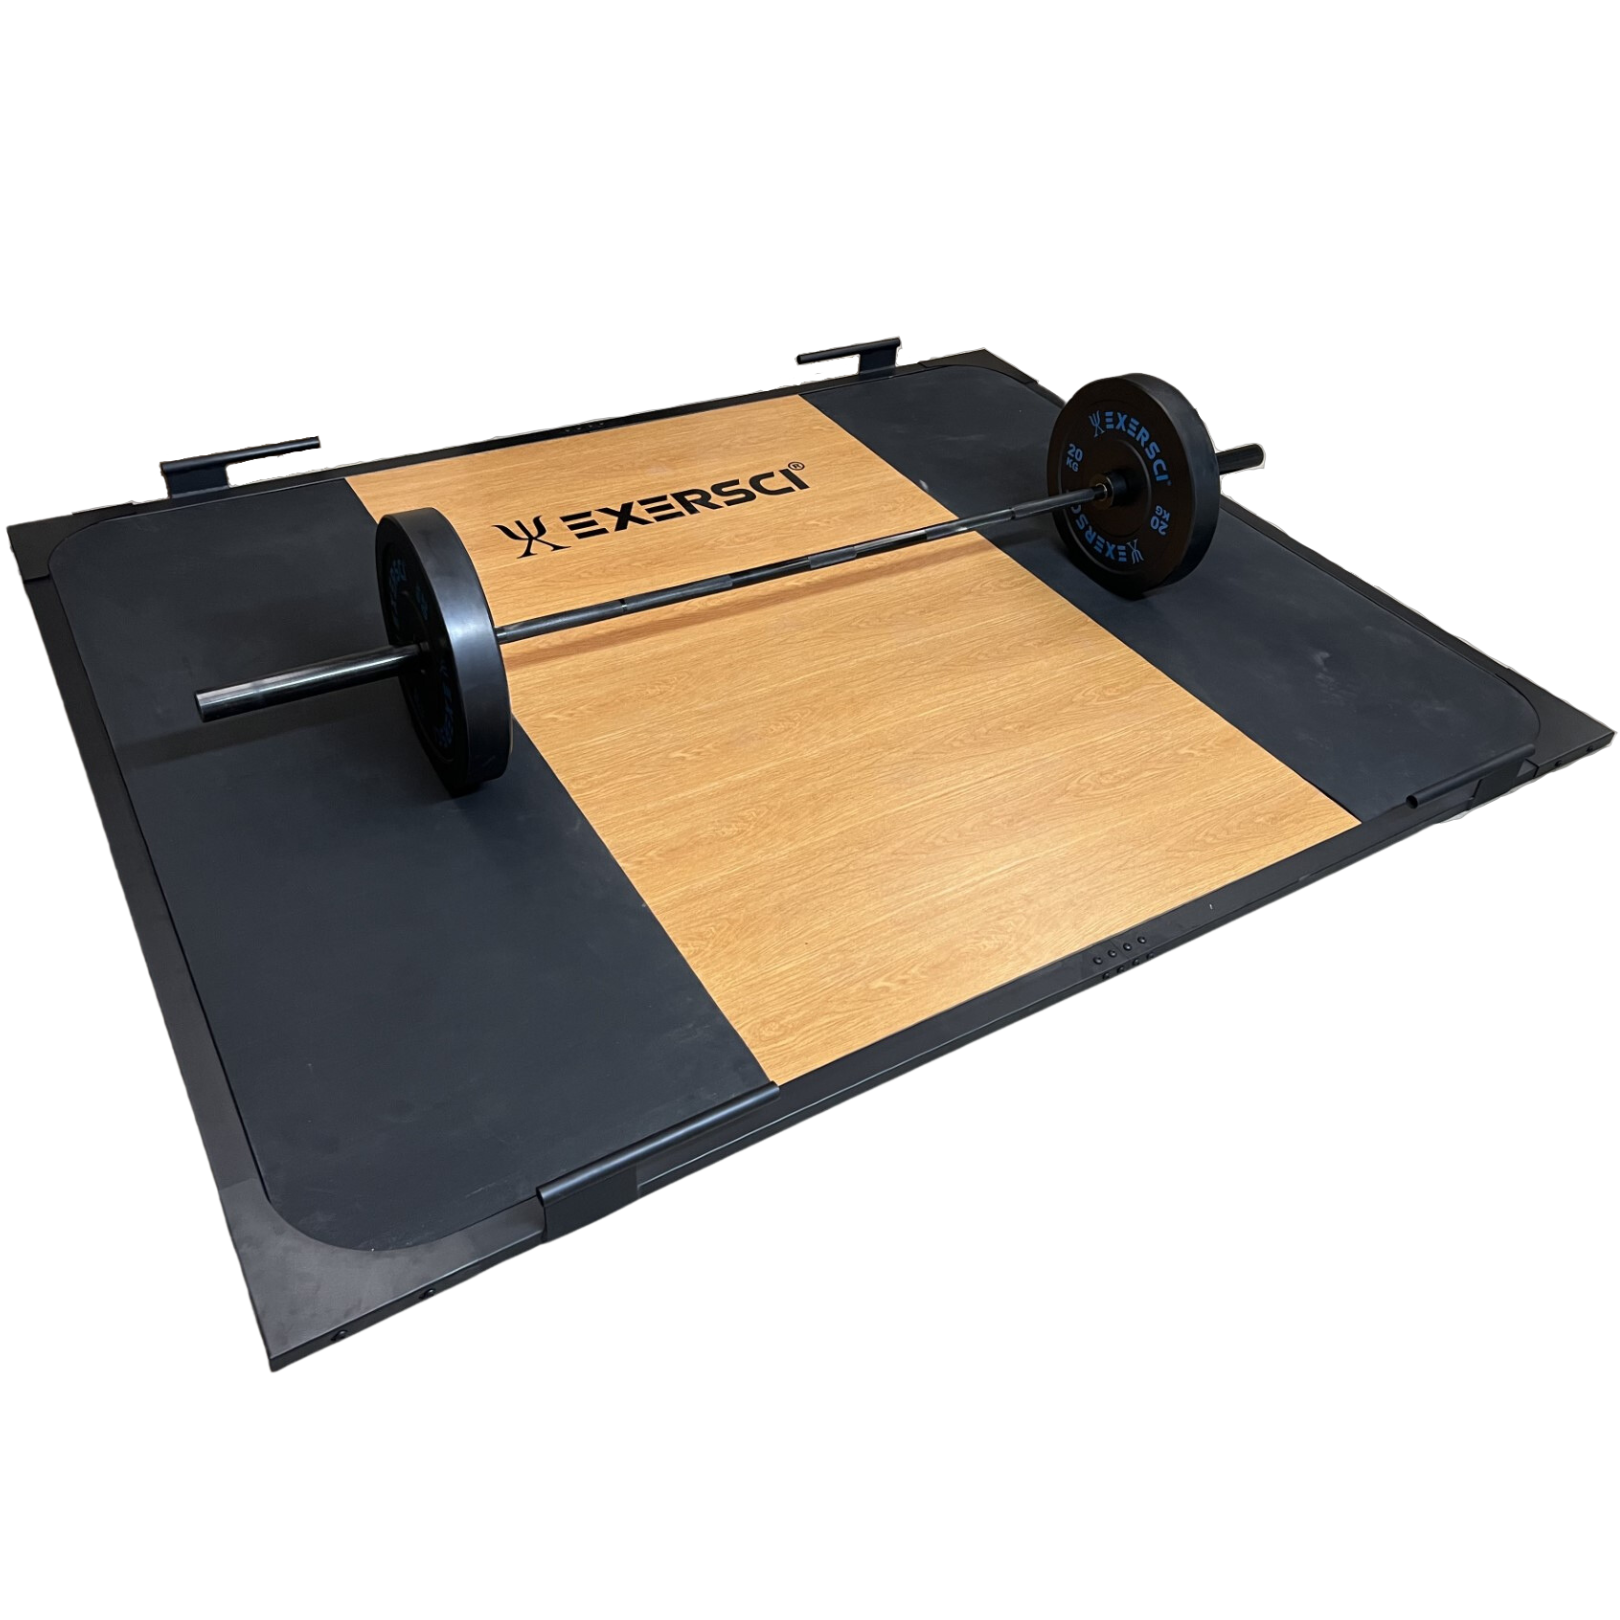 Exersci Premium Olympic Weightlifting Platform